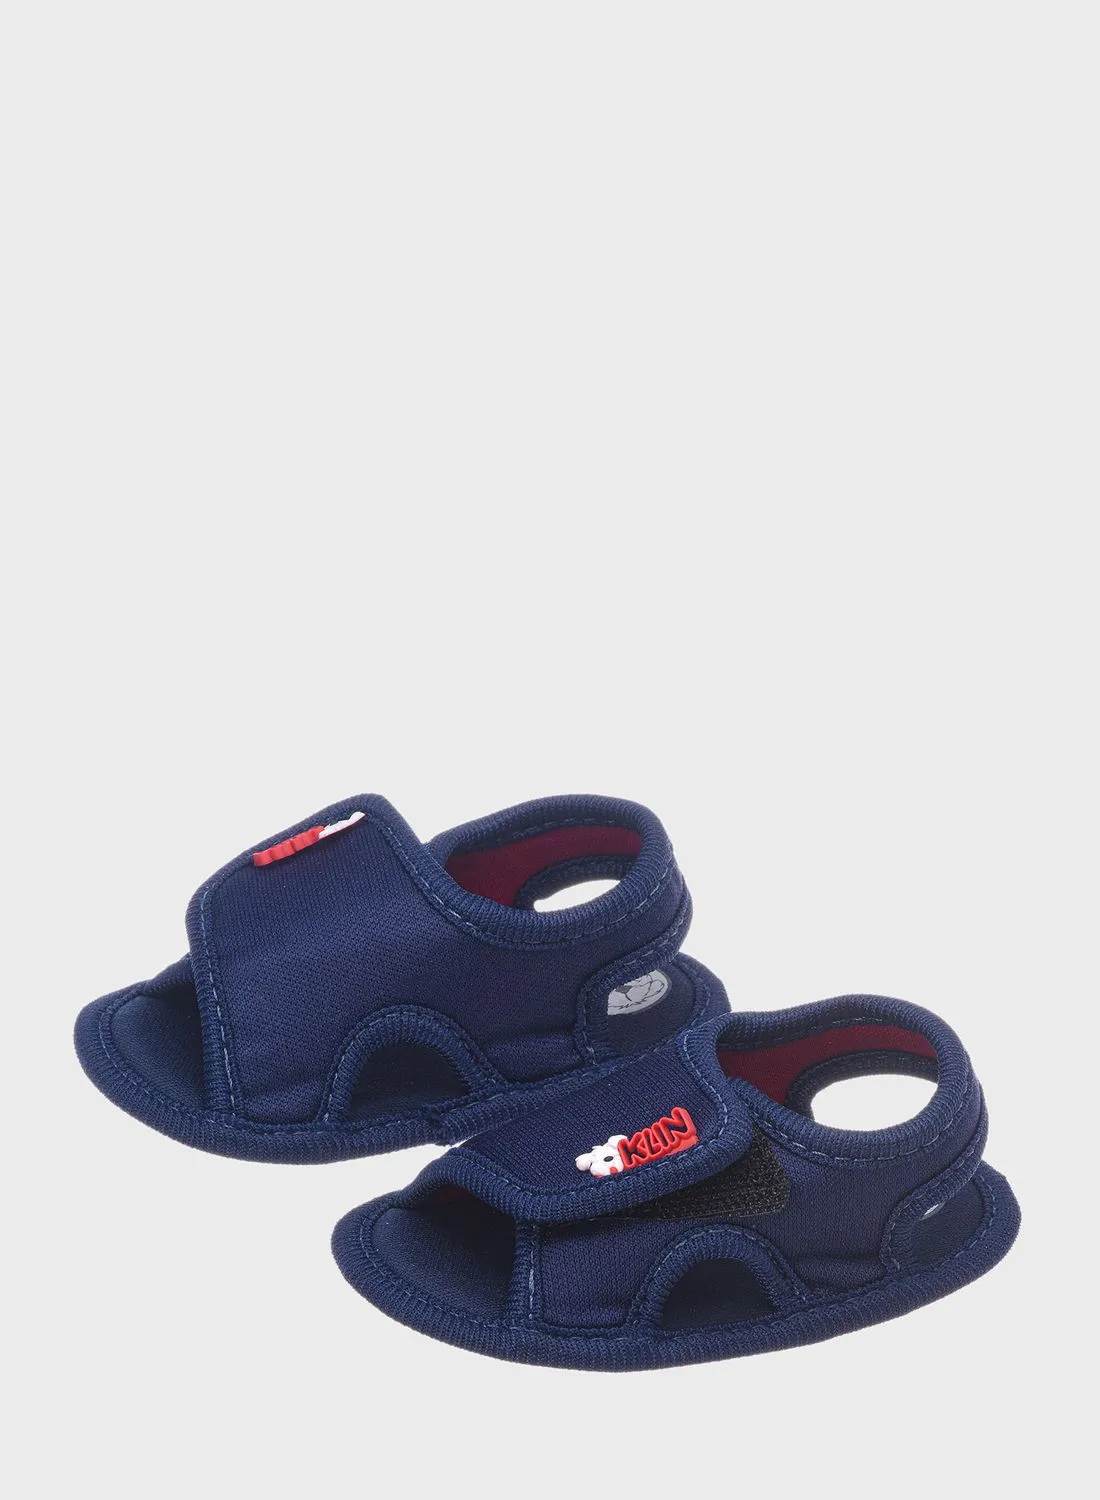 Klin Kids Velcro Sandals